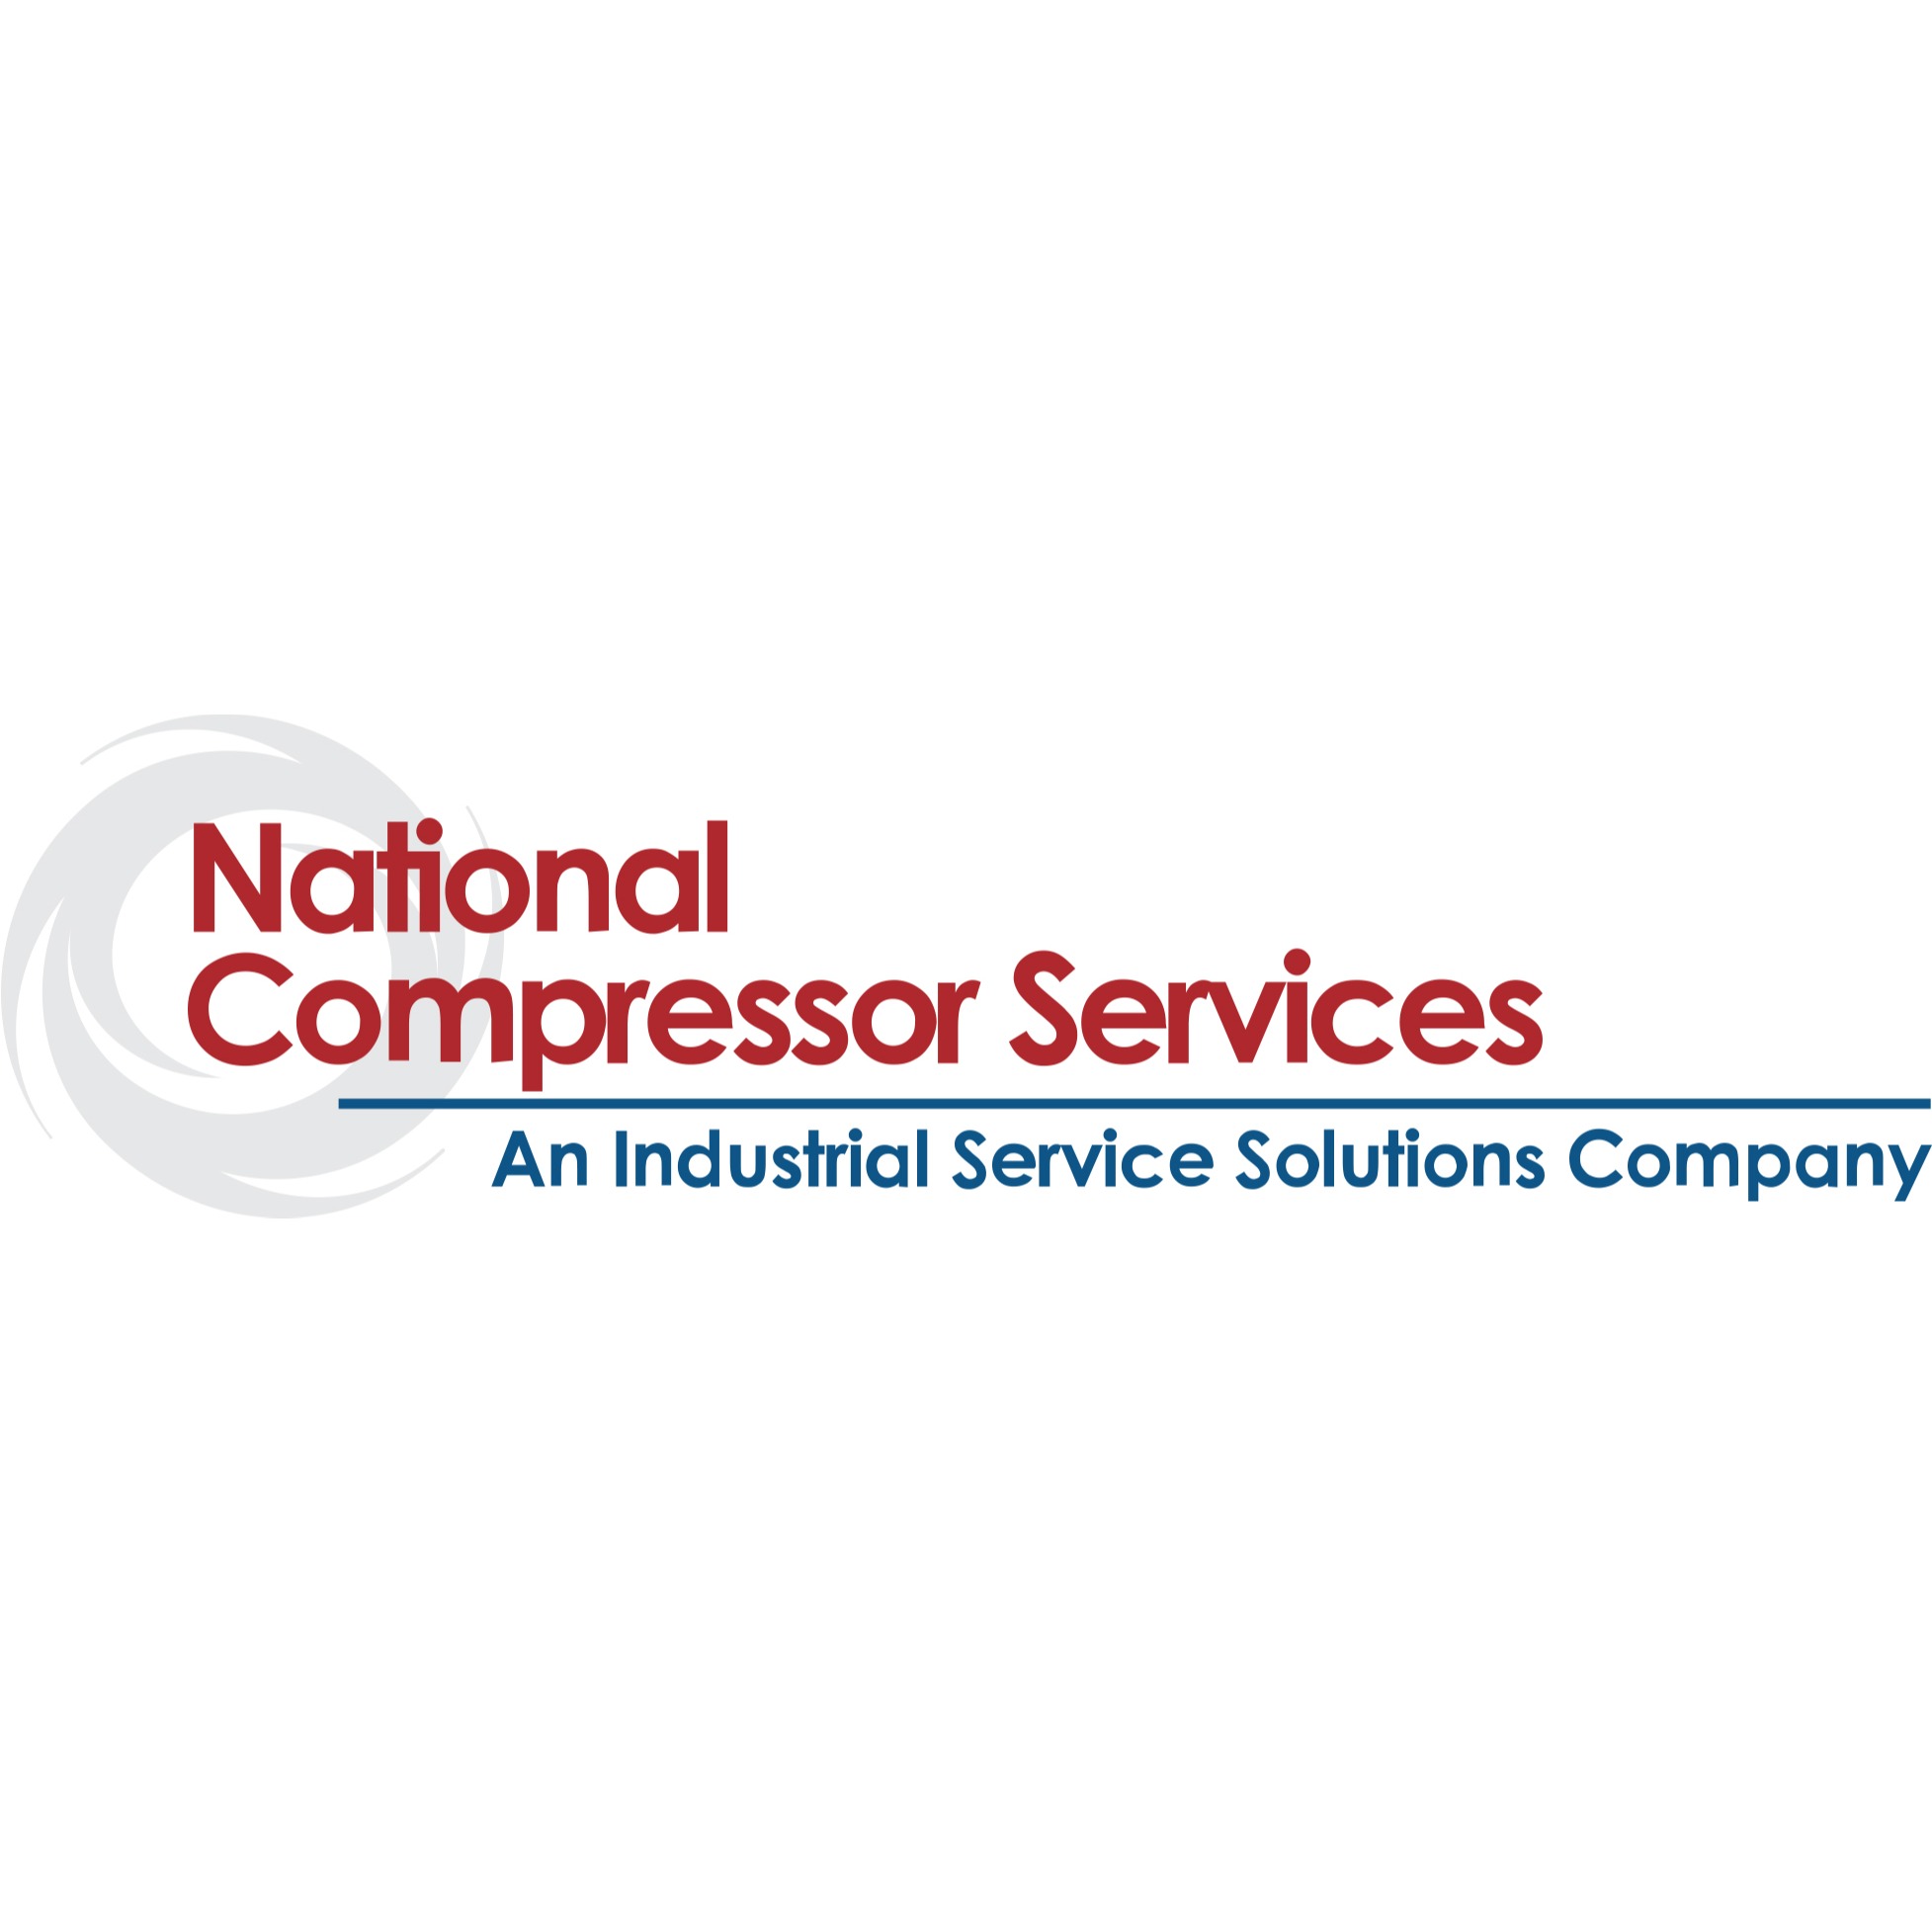 National Compressor Services